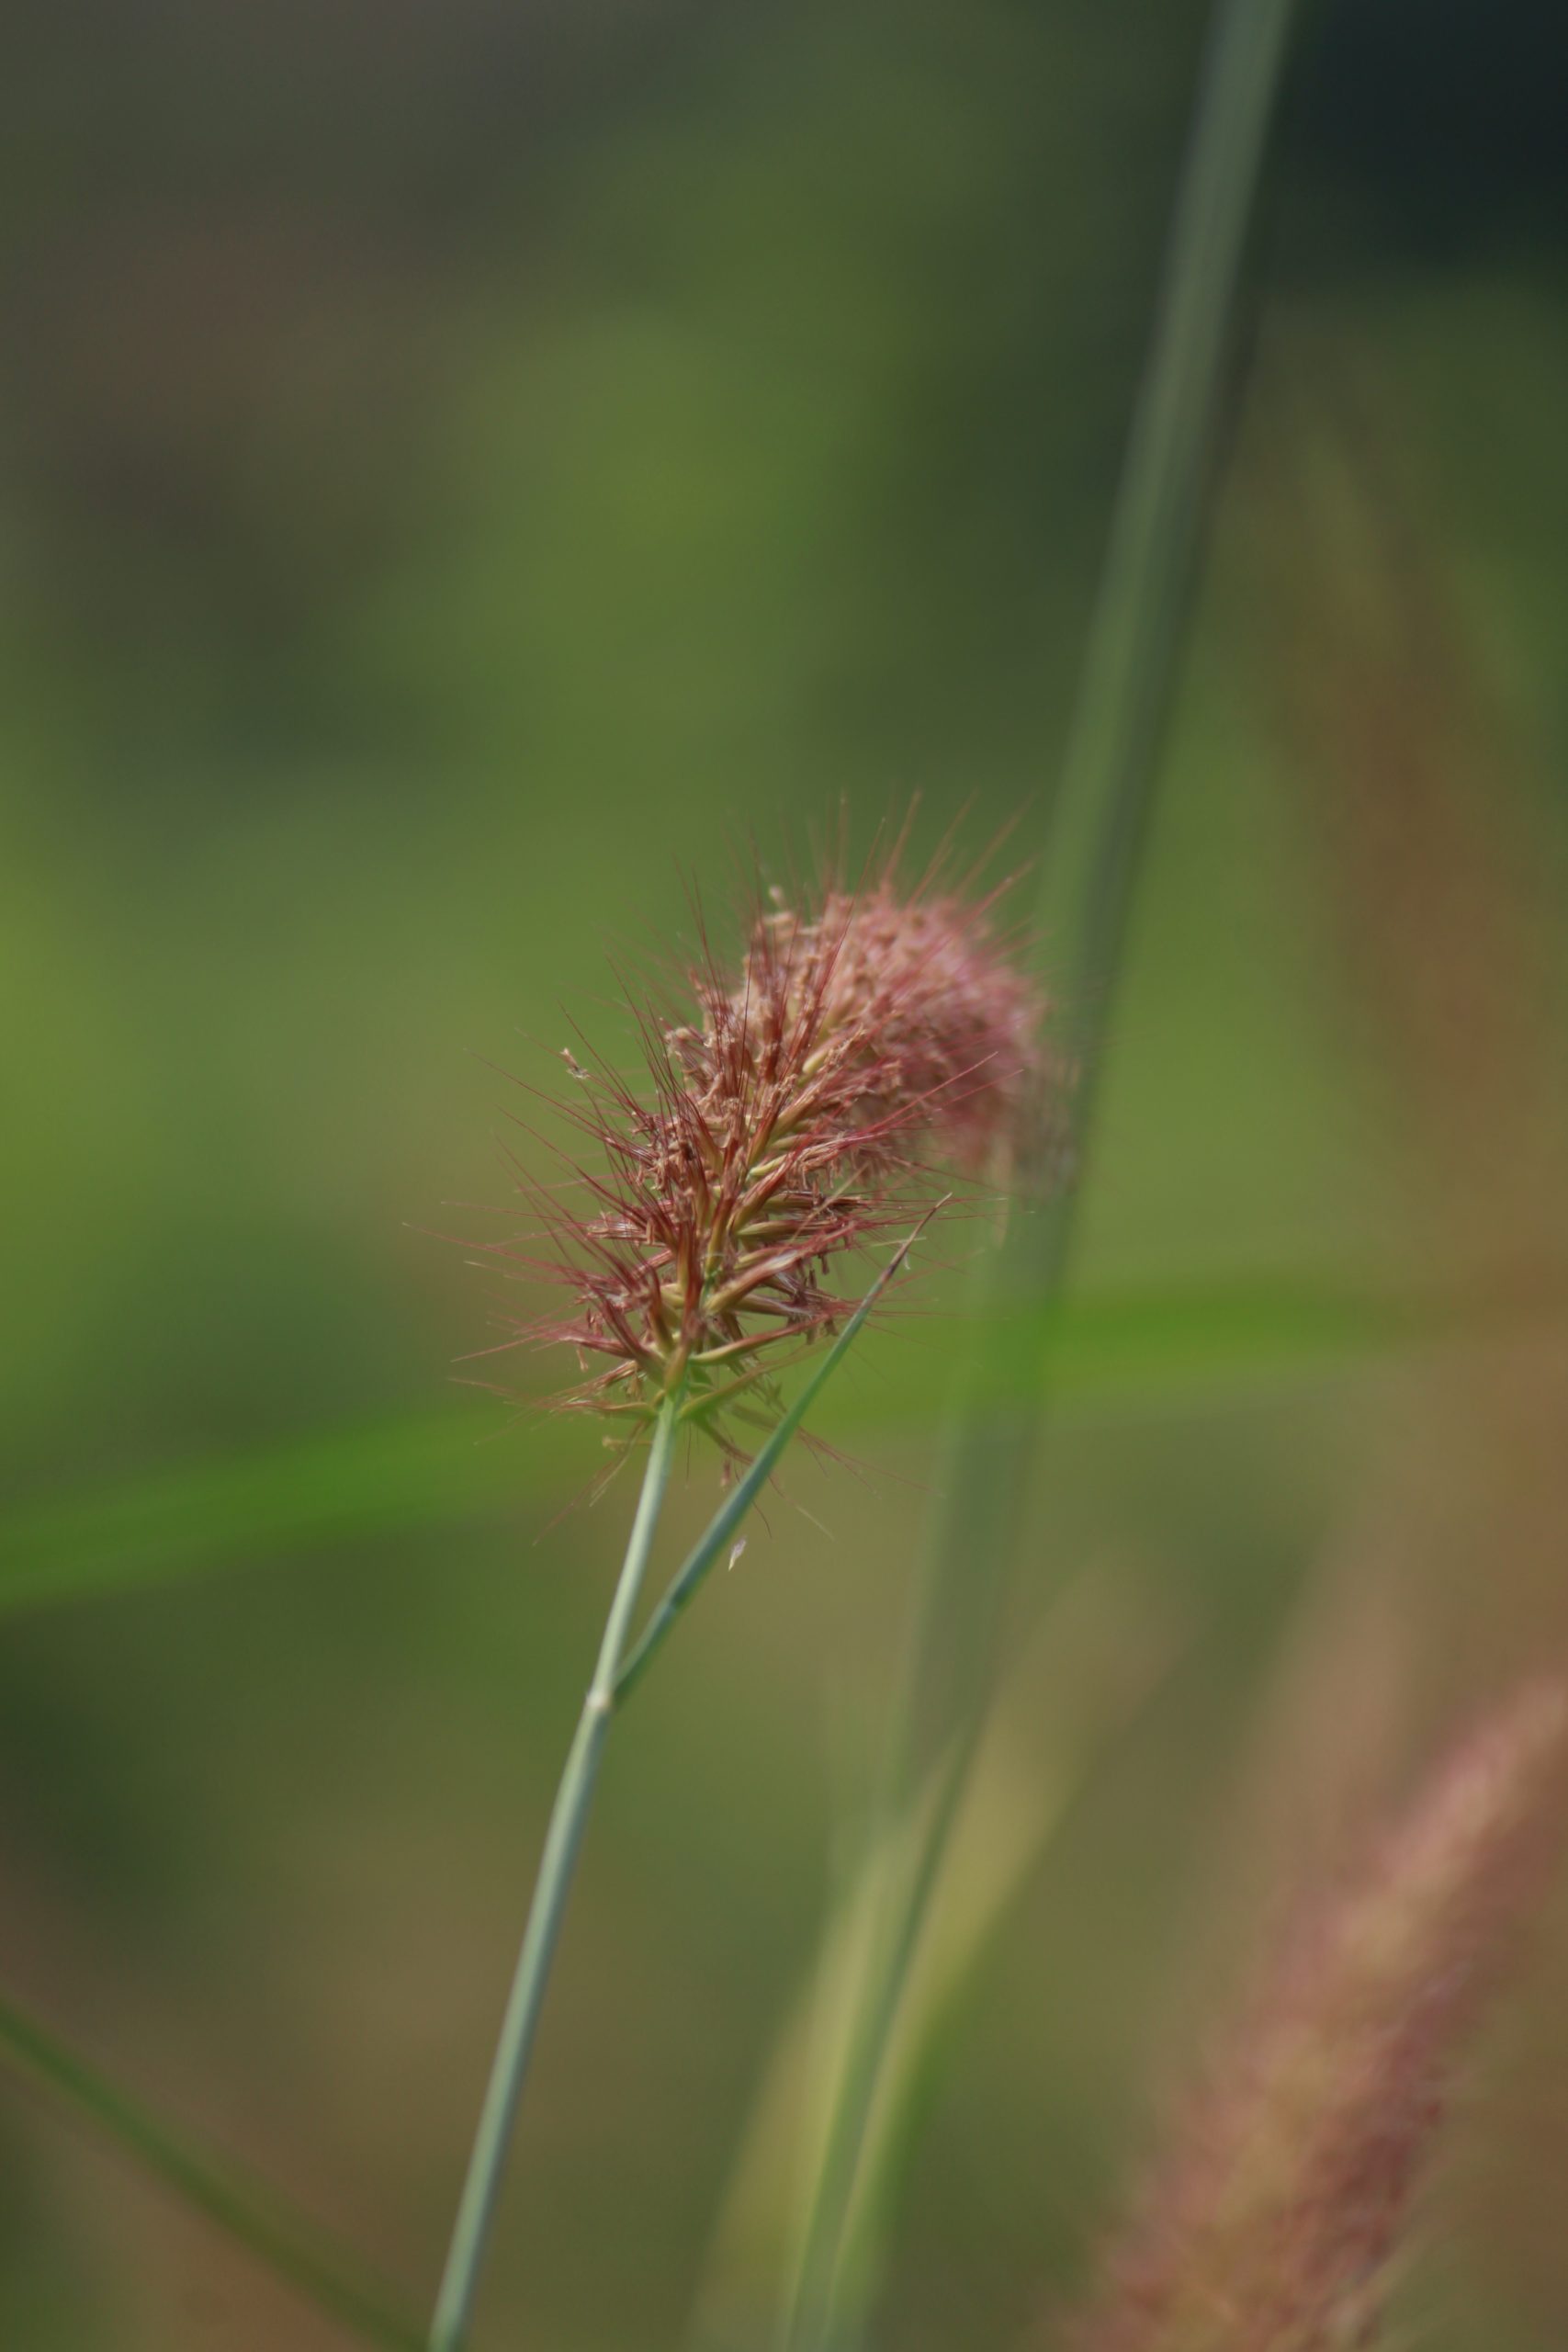 A grass plant